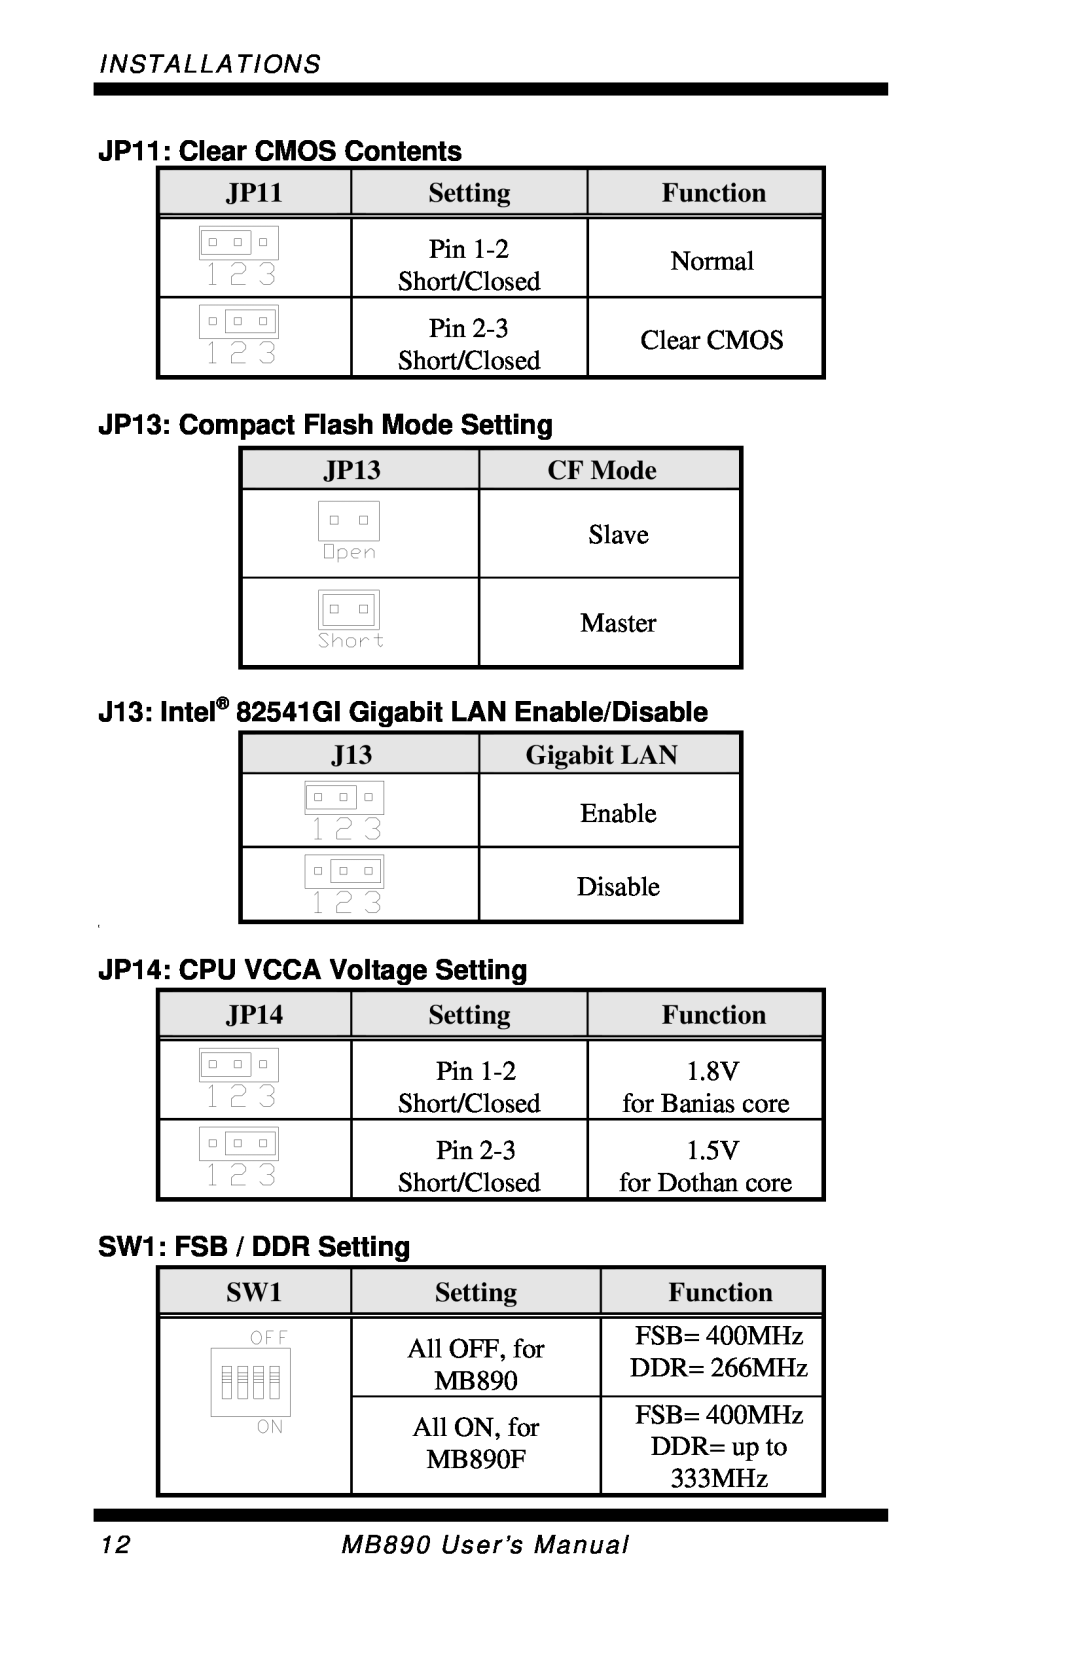 Intel MB890 JP11 Clear CMOS Contents, JP13 Compact Flash Mode Setting, J13 Intel 82541GI Gigabit LAN Enable/Disable 